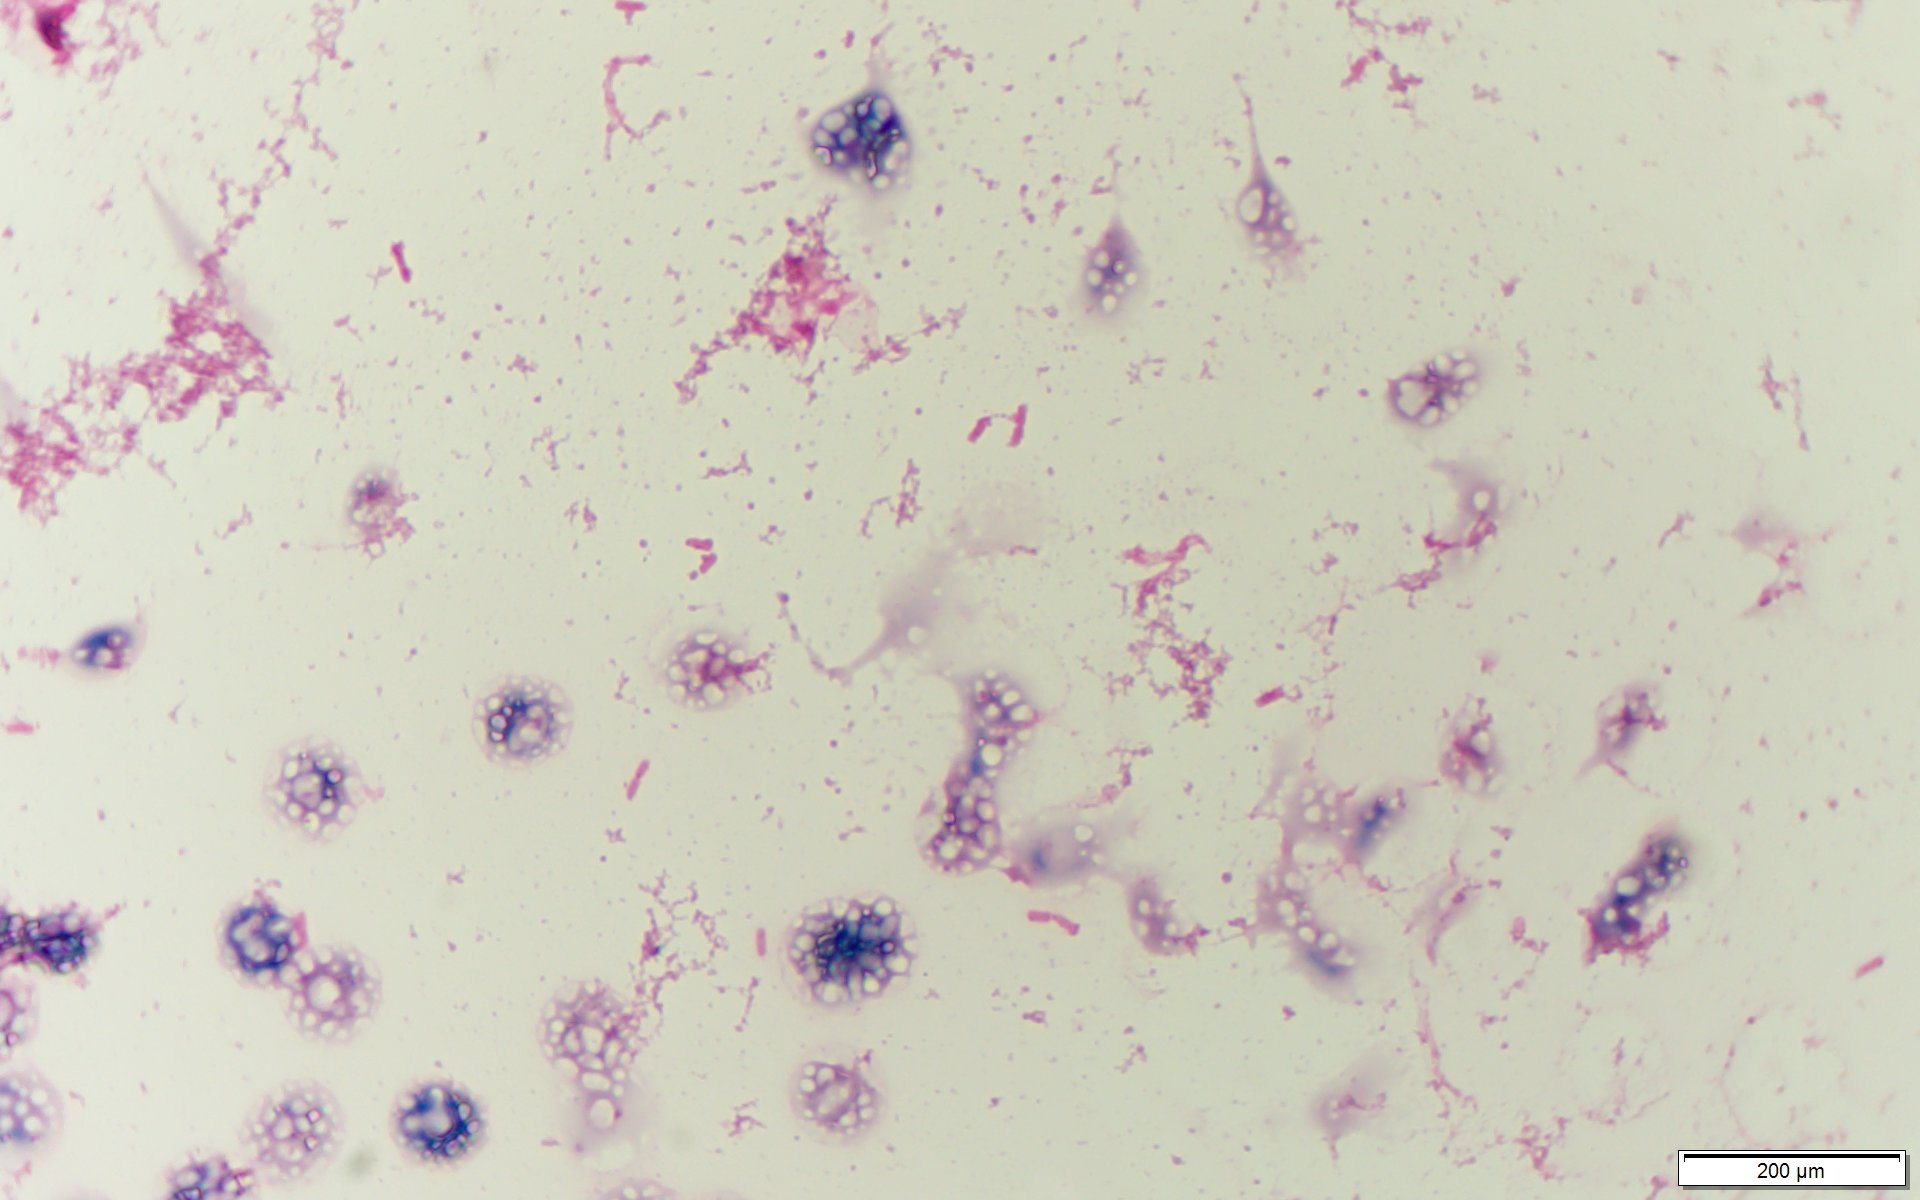 Salmonella enterica serovar Paratyphi〔パラチフス〕